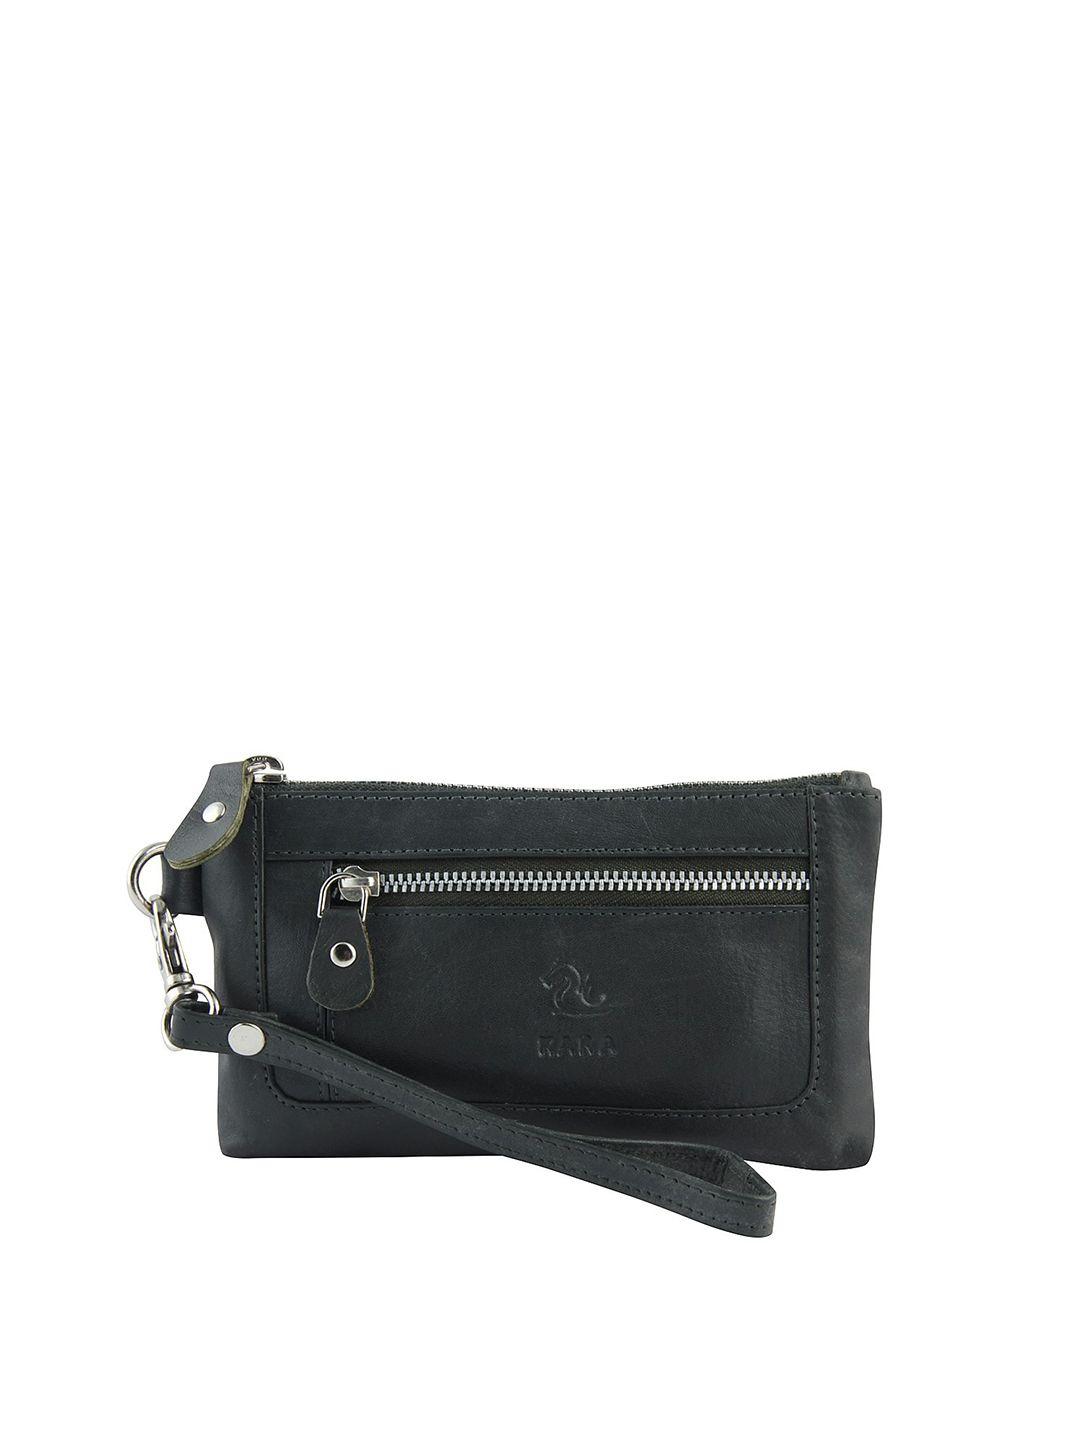 kara leather purse clutch with zip detail